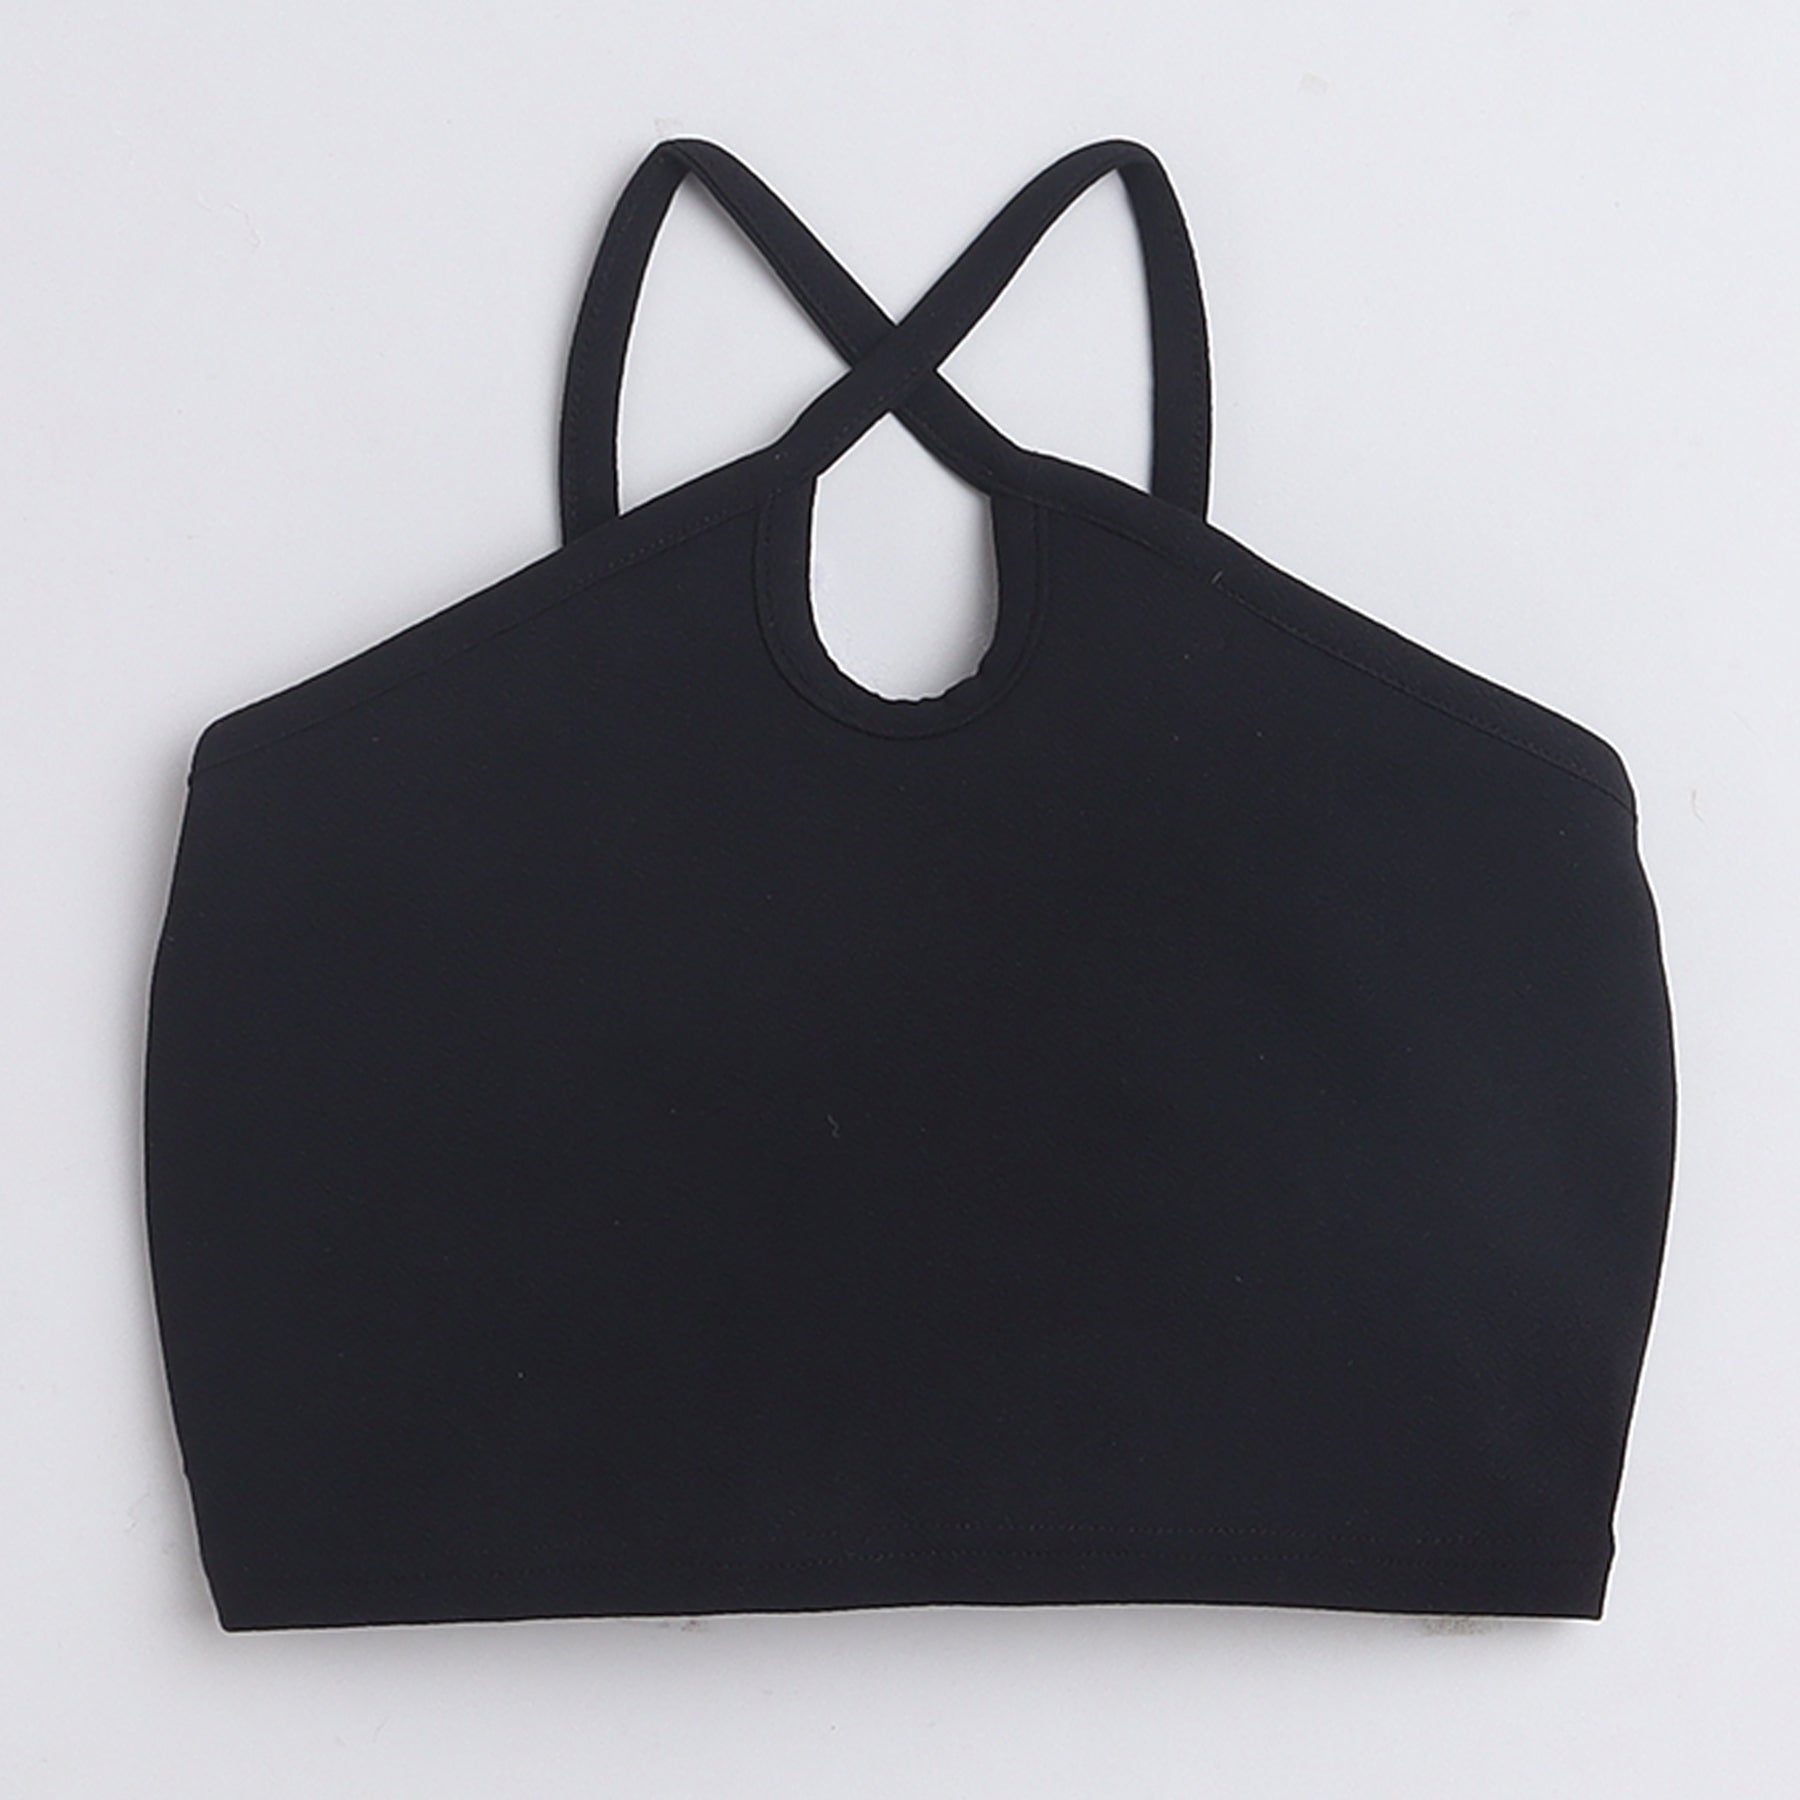 Shop Cut Out Detail Halter Neck Crop Top And Textured Bow Detail Skirt Set-Black/Grey Online